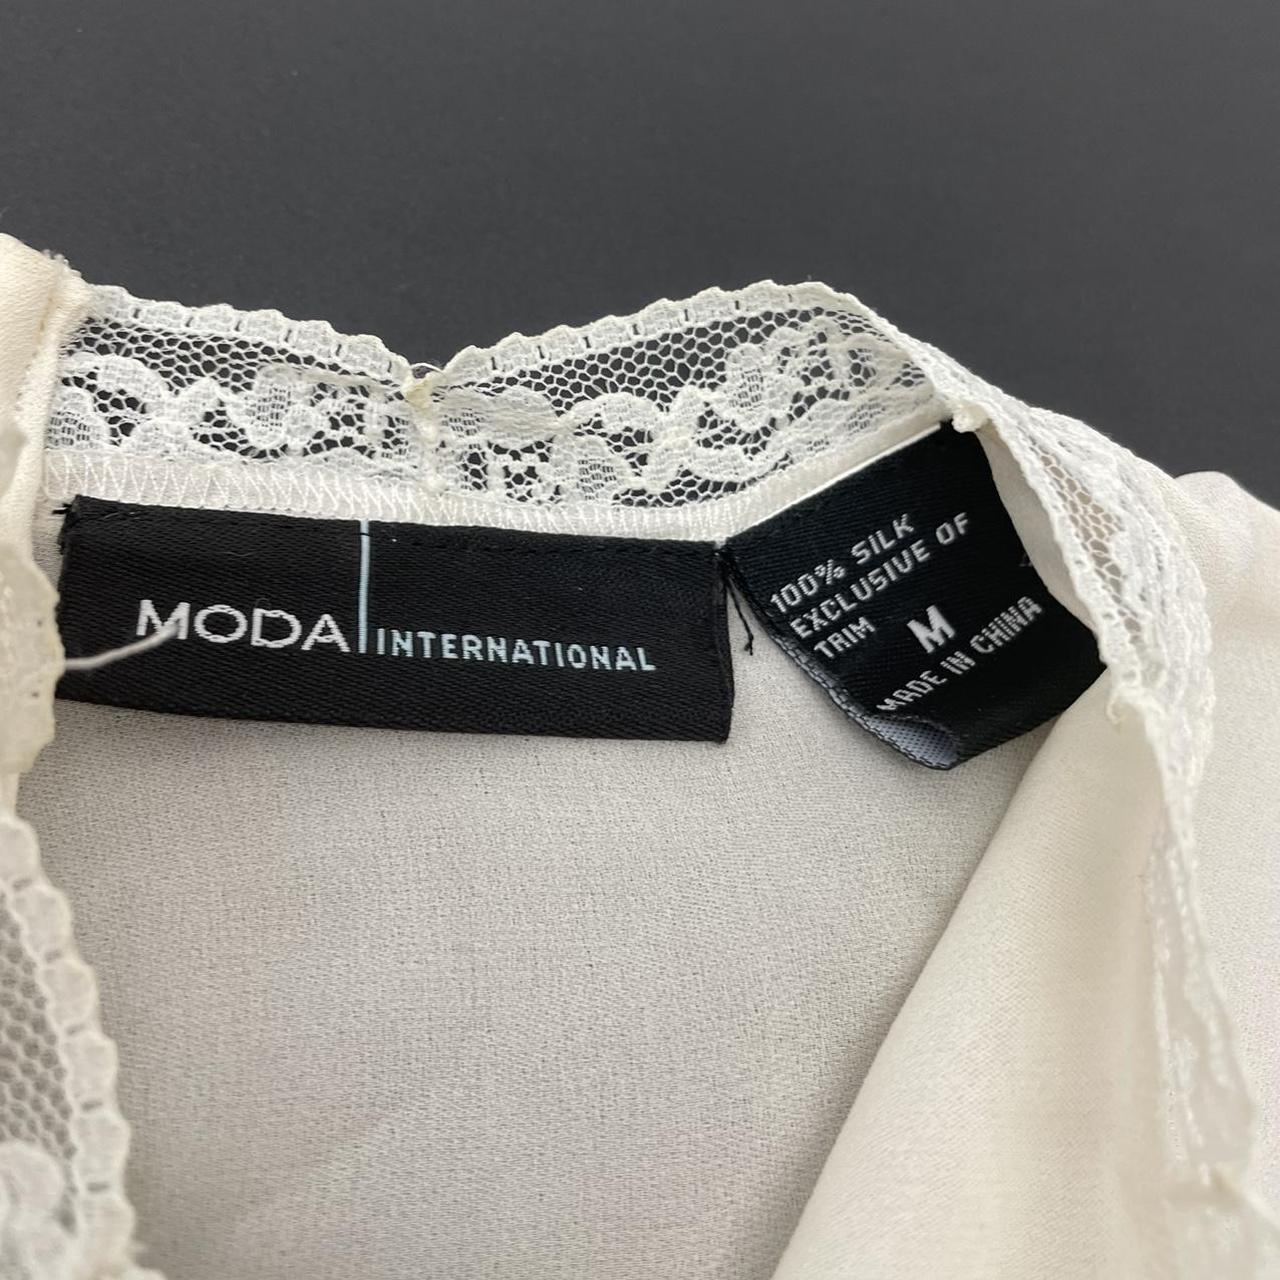 Moda International Women's White and Cream Blouse (4)